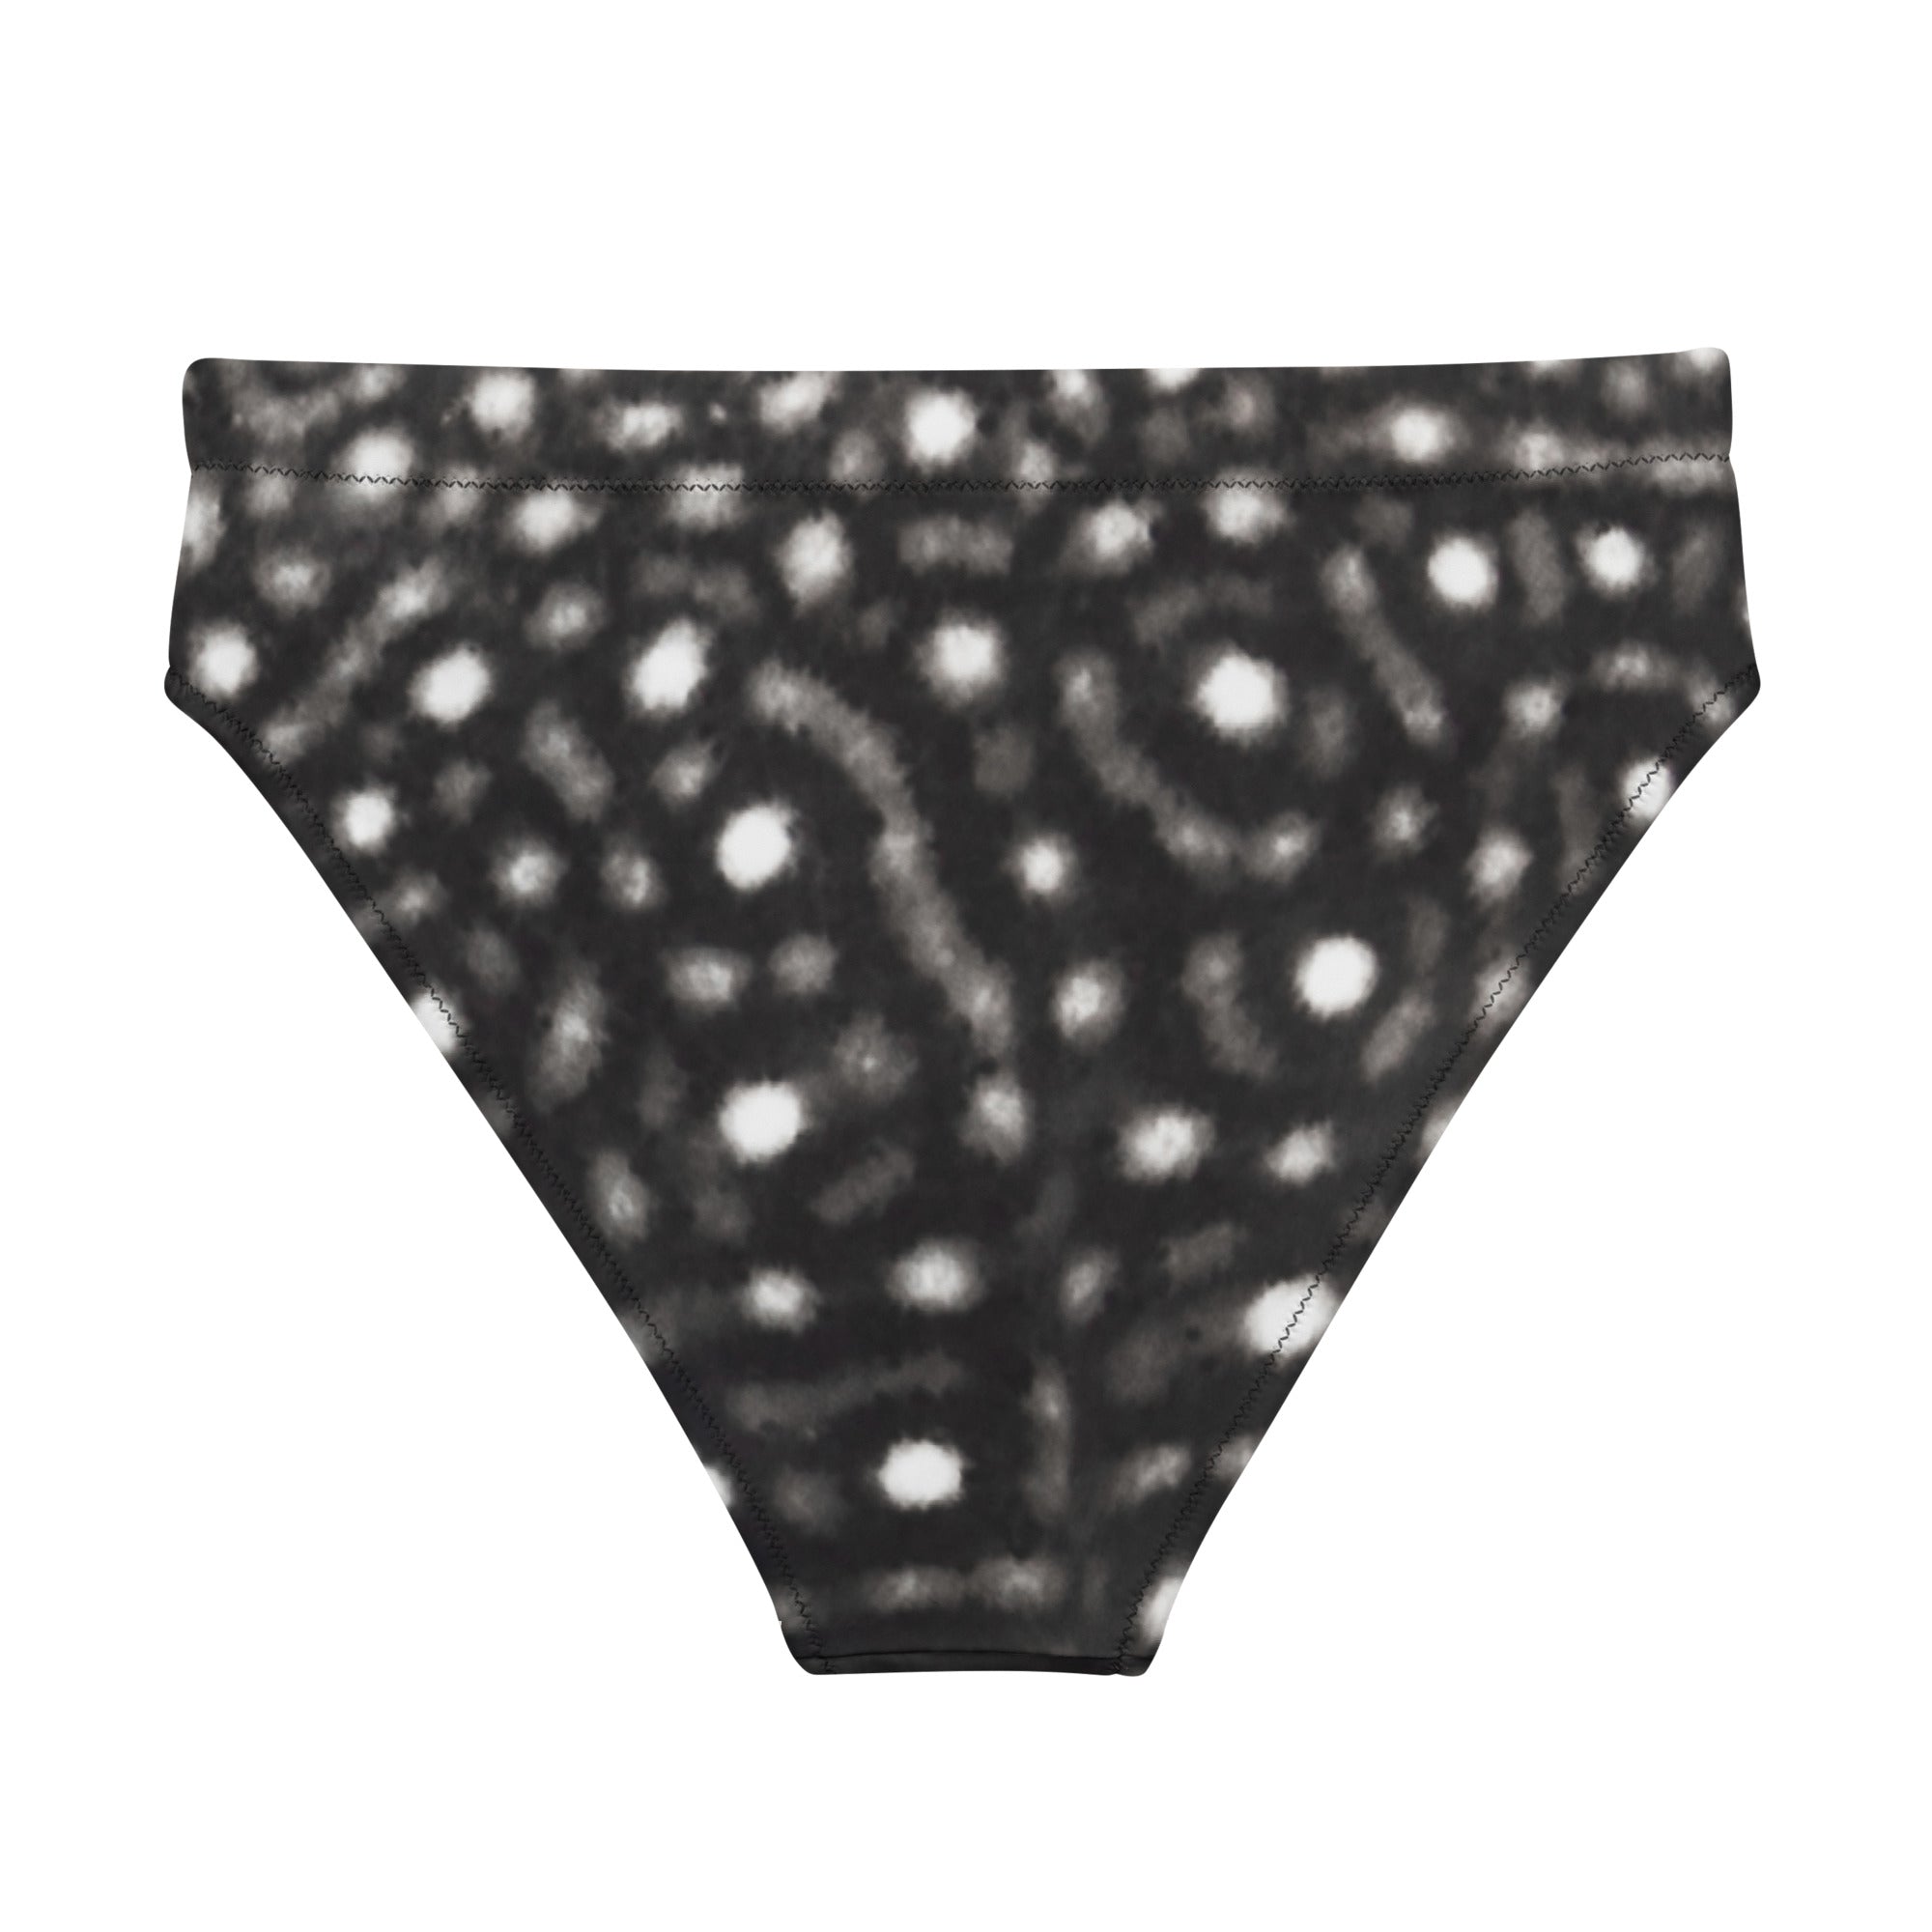 B&W Whale Shark Bikini Bottom - Limited Edition